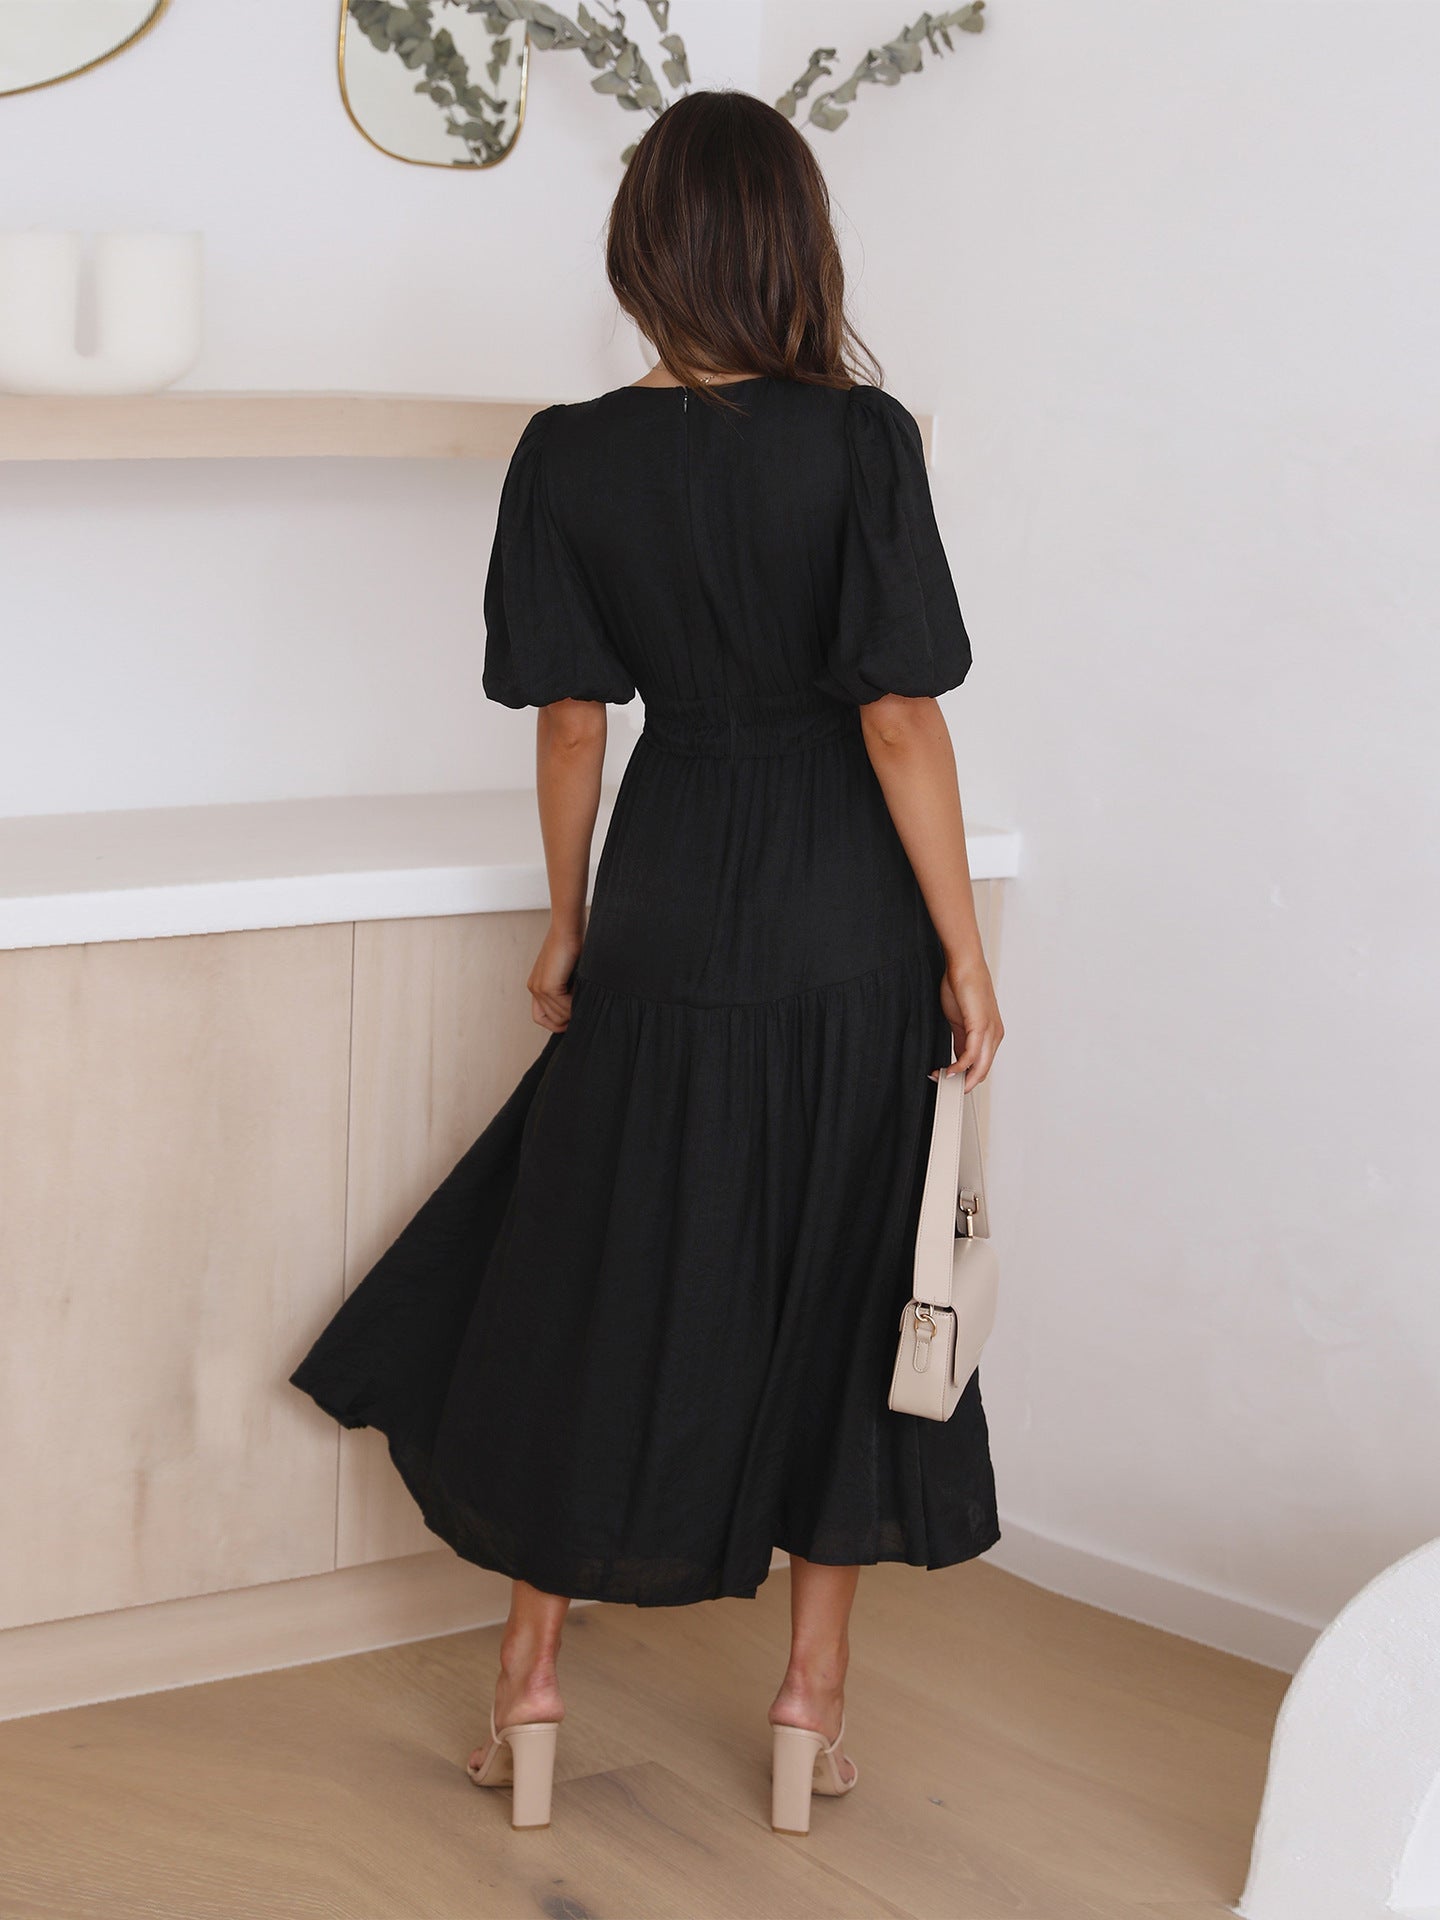 Summer V Neck Holiday Dresses for Women-Dresses-Black-S-Free Shipping Leatheretro